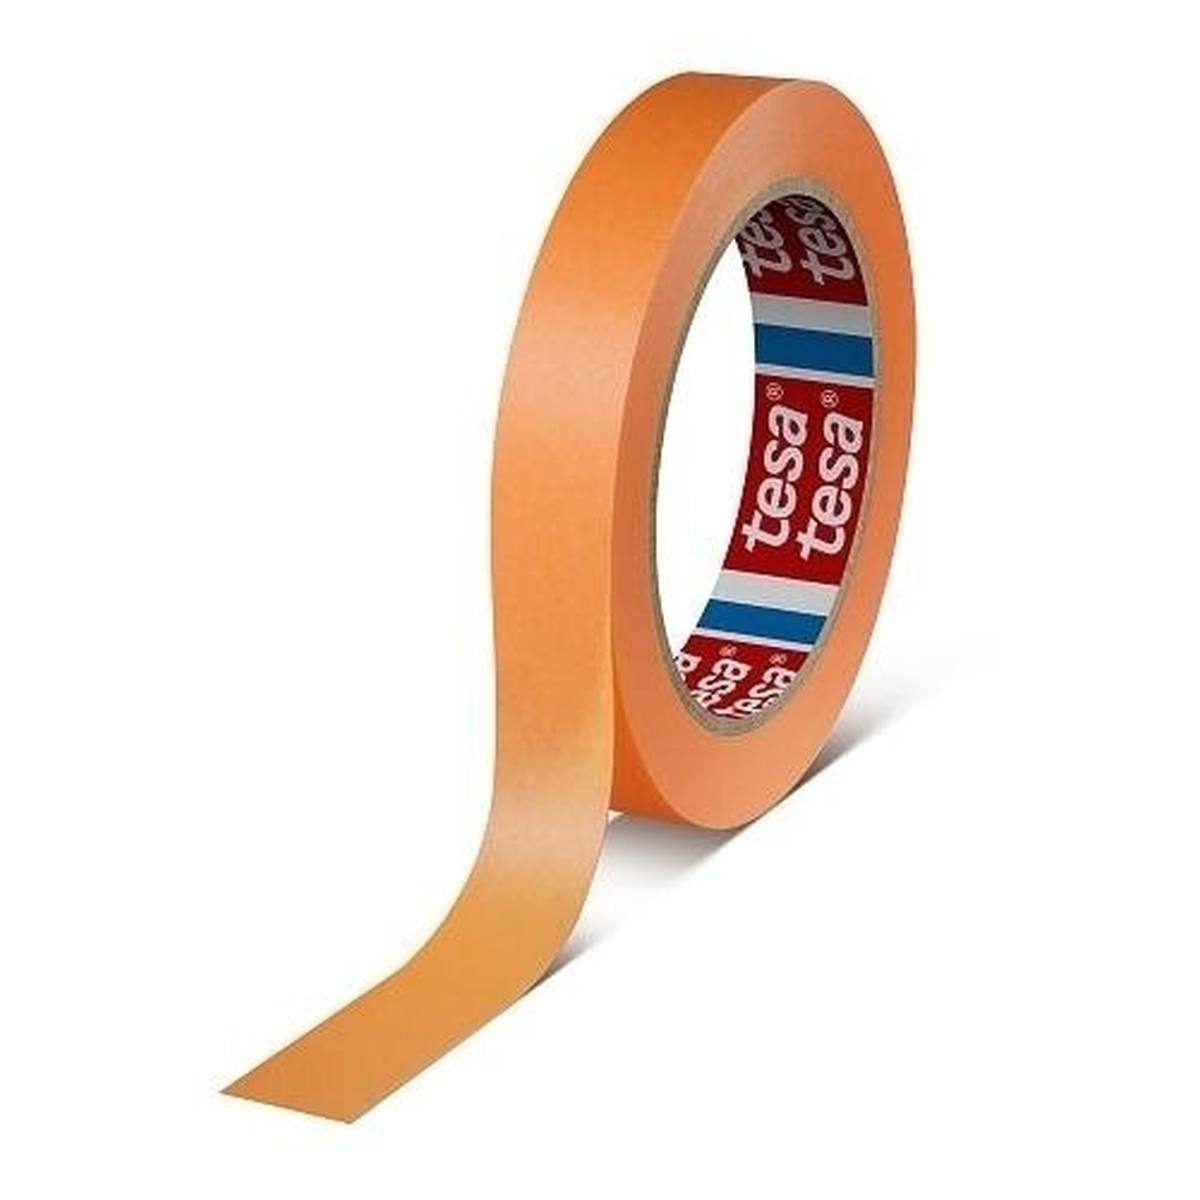 Tesakrepp 4342 Precision crepe washi tape 50mmx50m orange